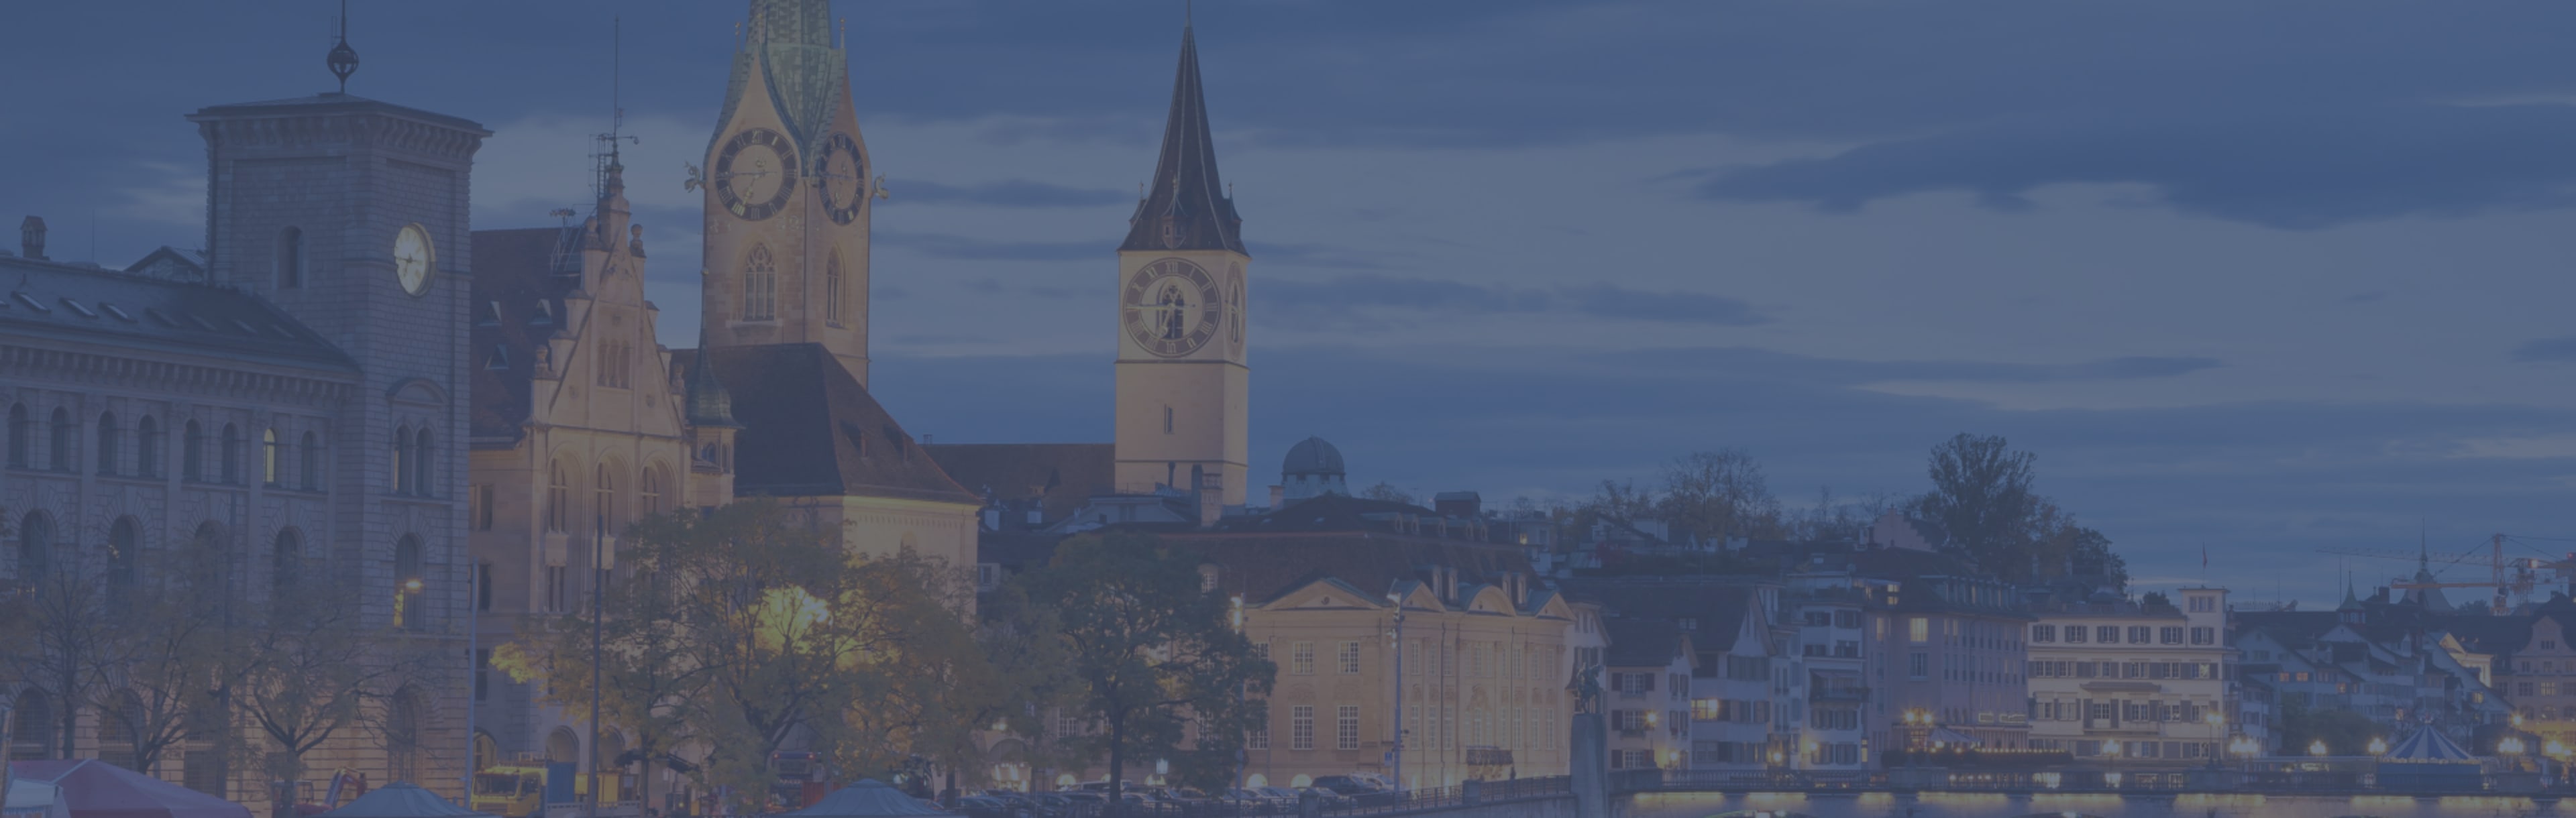 University of Lausanne UNIL - Executive MBA